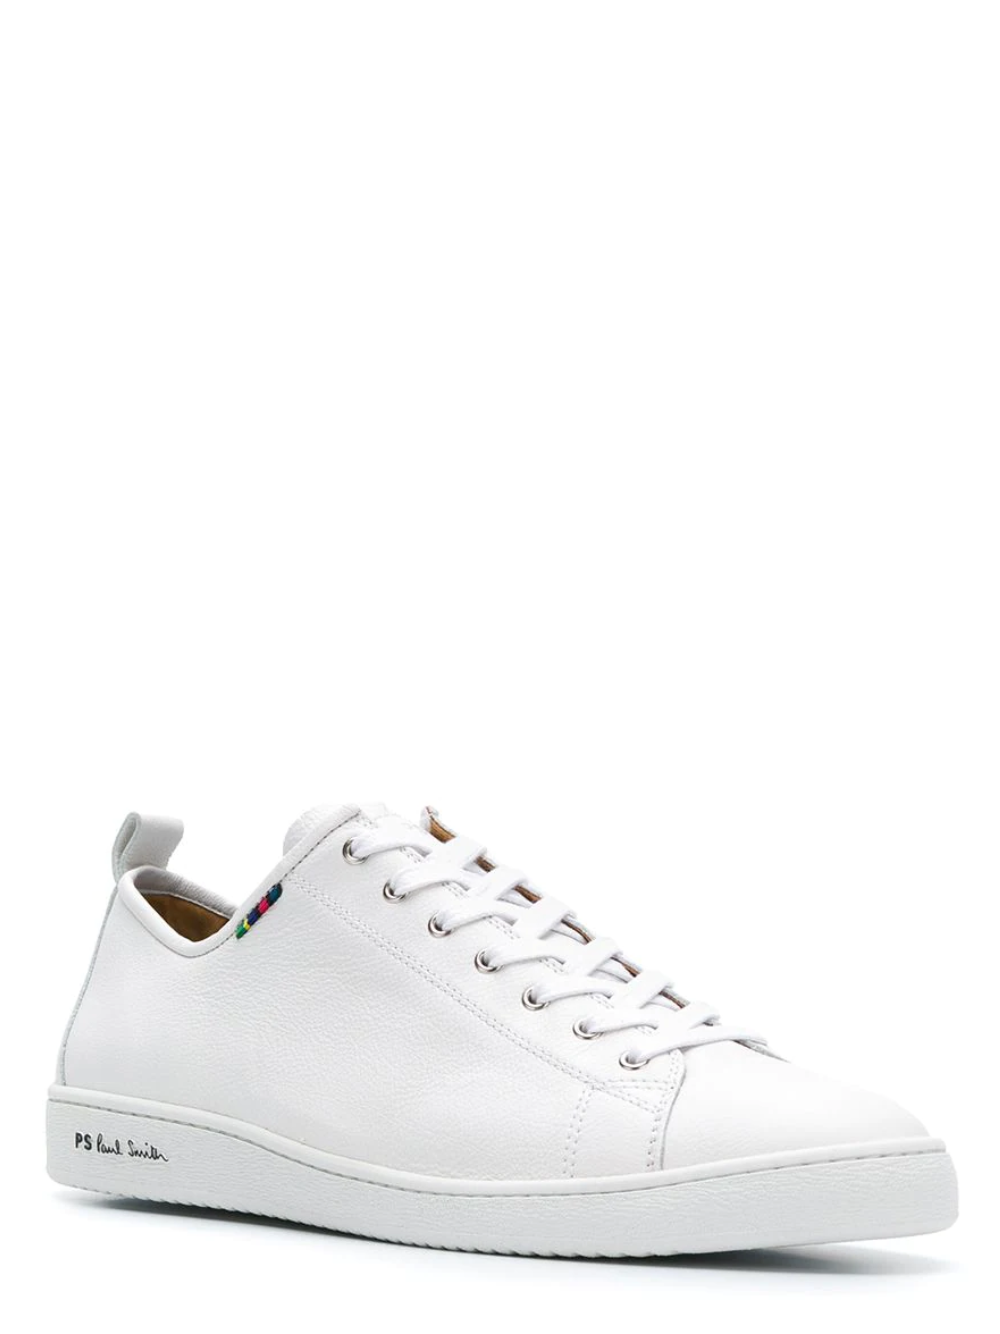 Paul-Smith-Men-Calf-Leather-Miyata-Sneakers-White-2